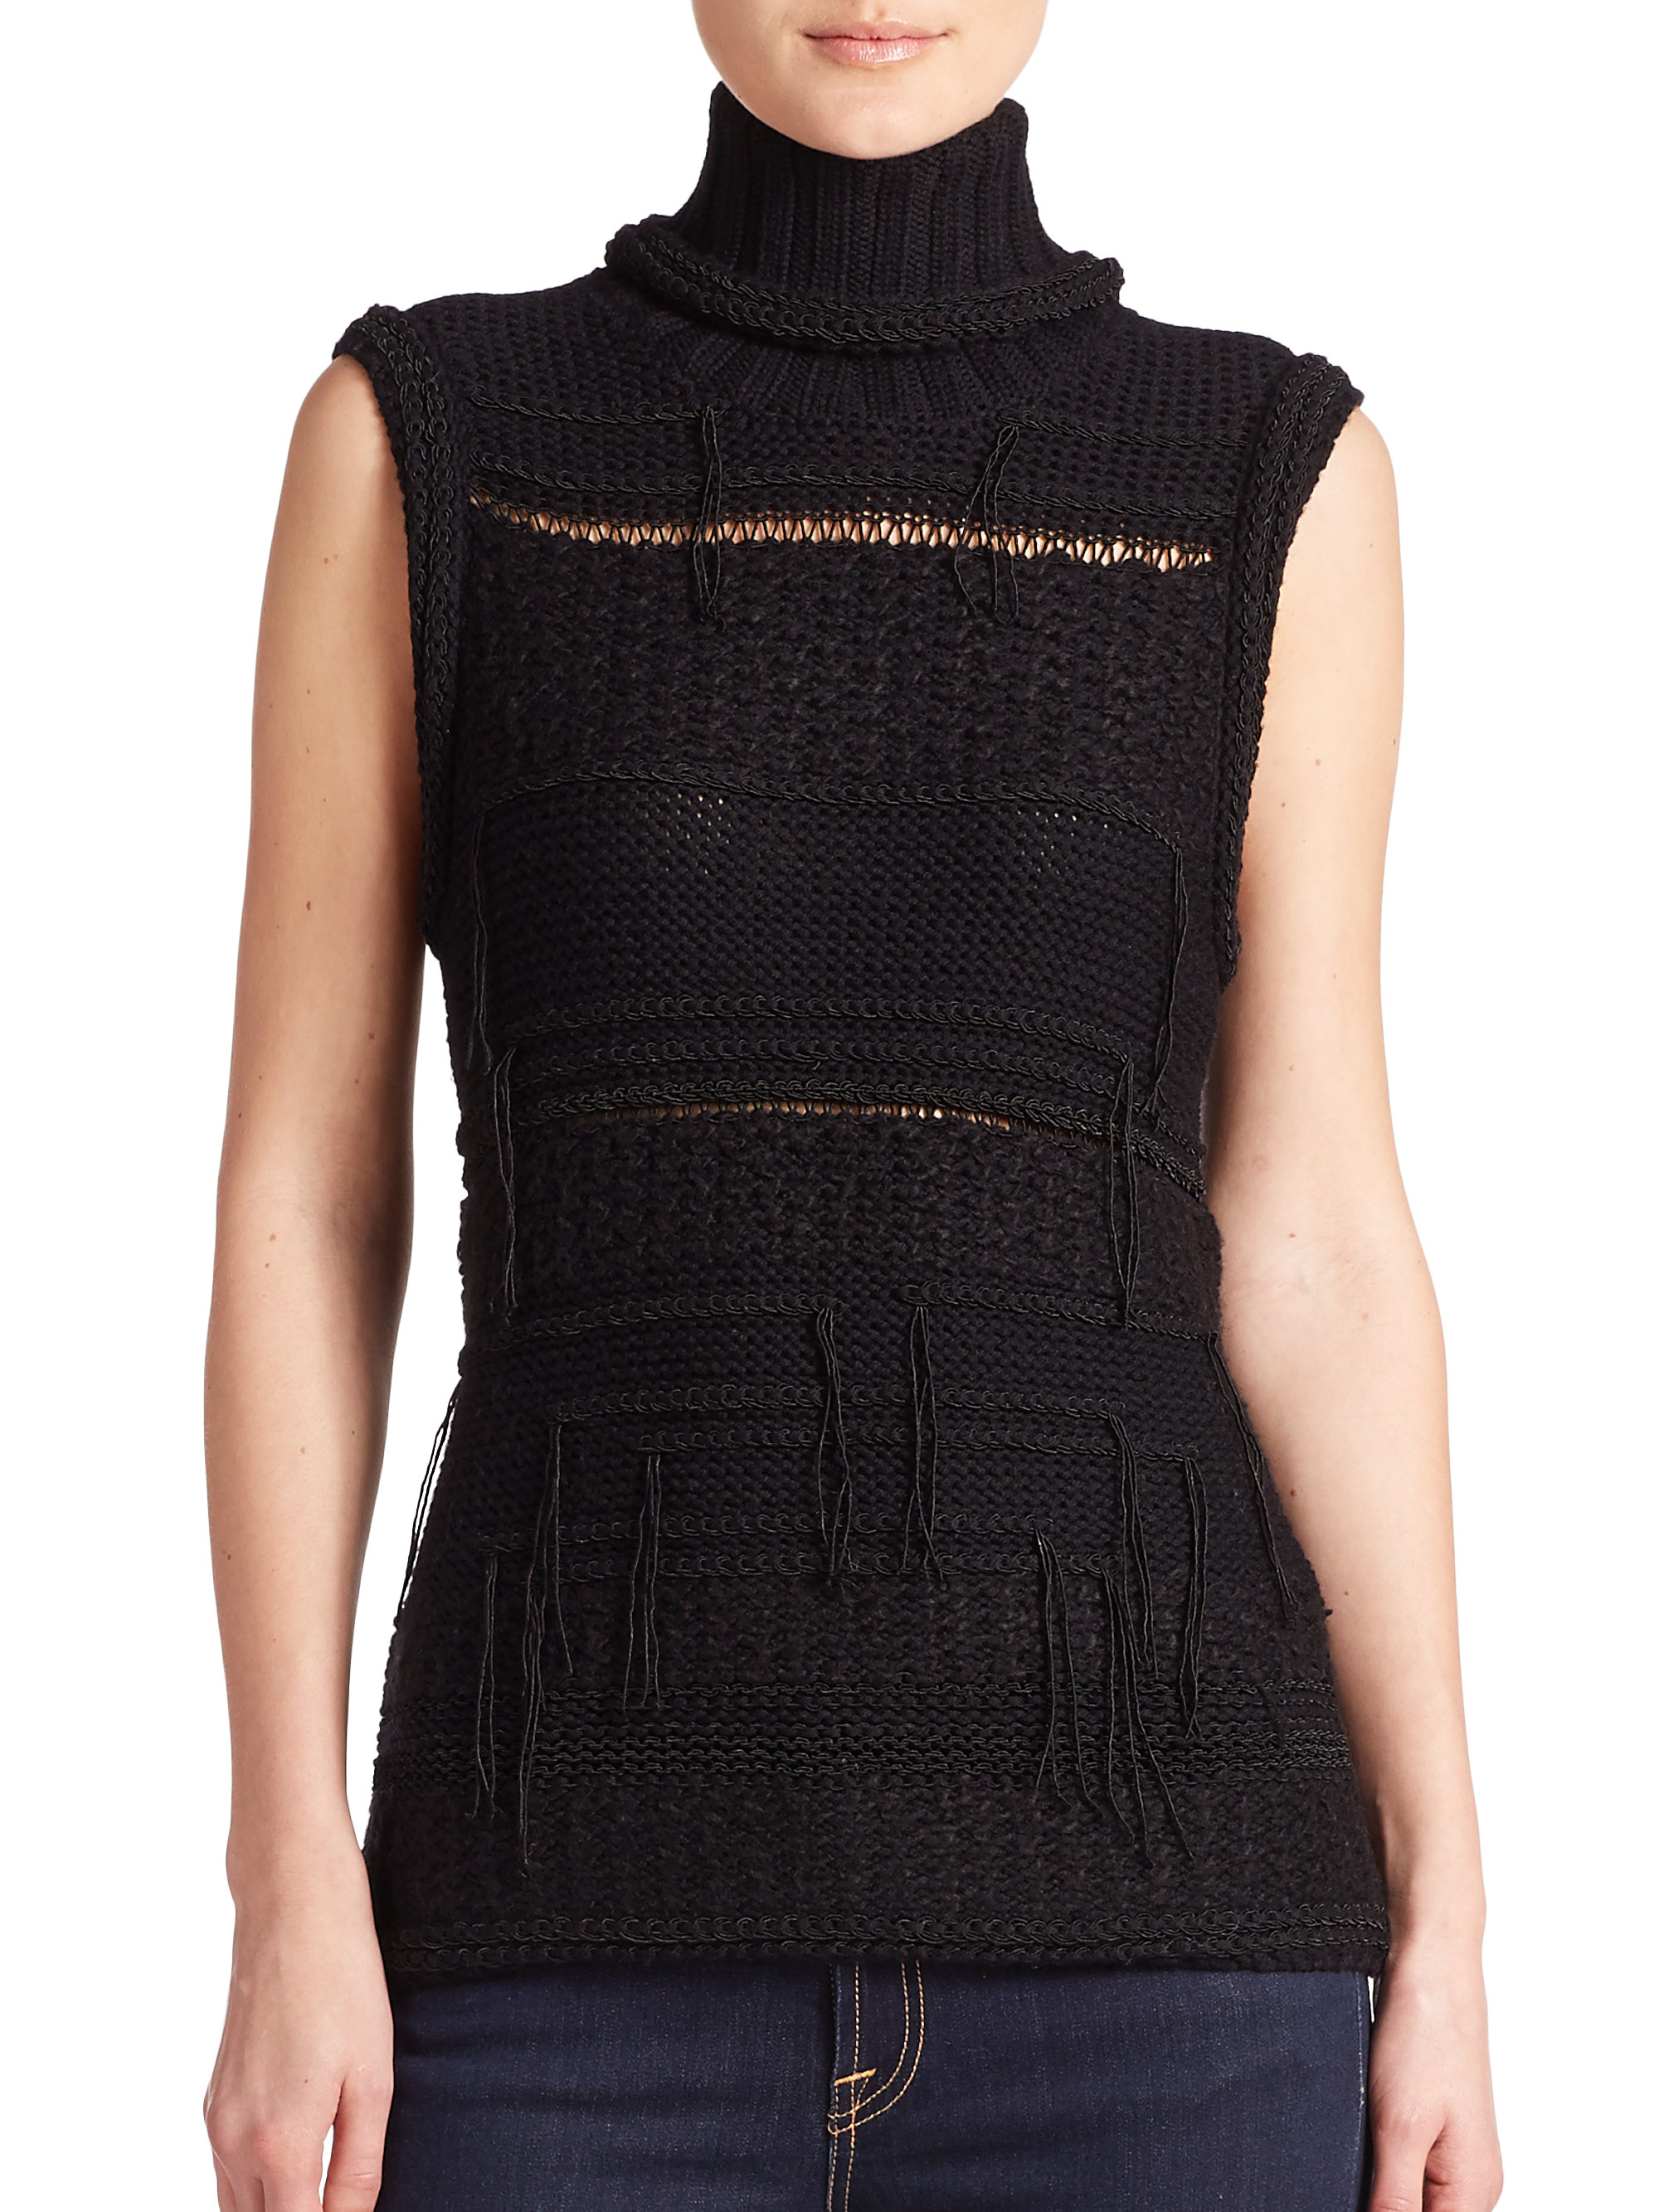 Ramy brook Merino Wool Sleeveless Textured Turtleneck Top in Black | Lyst